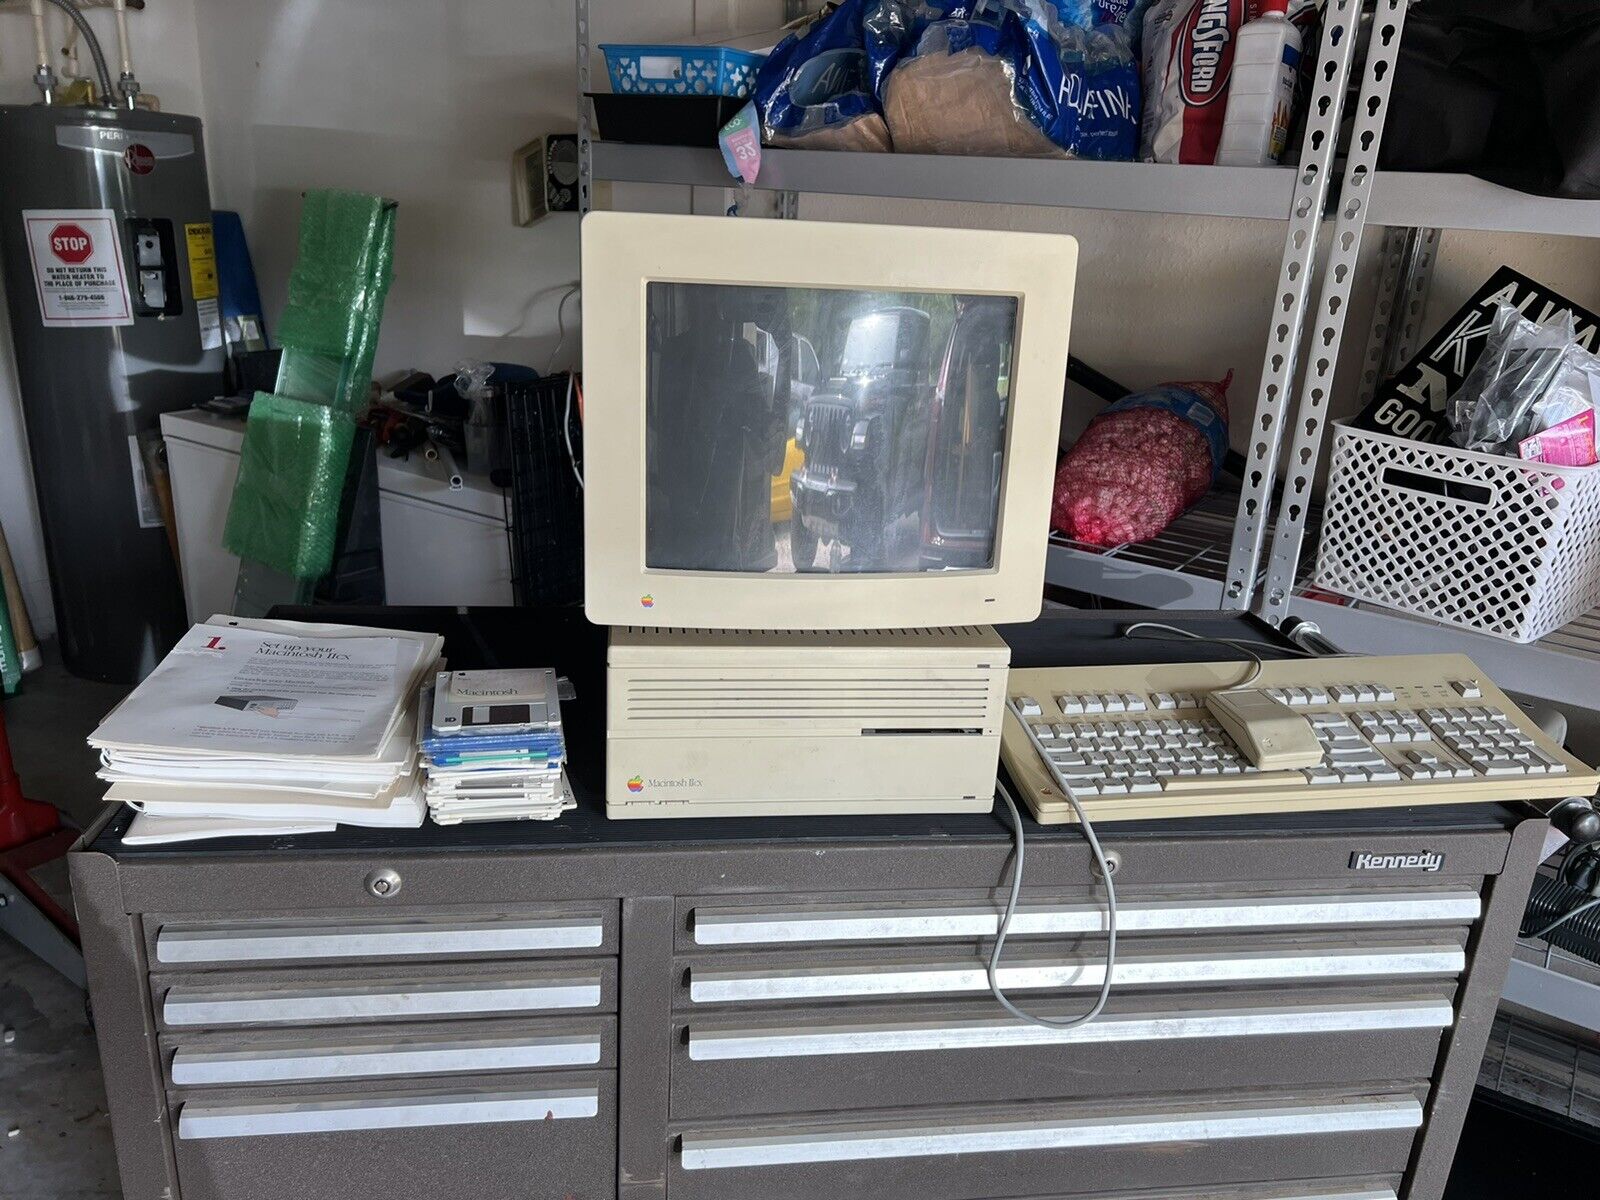 Apple MacIntosh IIcx - Vintage Desktop Computer - Parts / Repair Complete